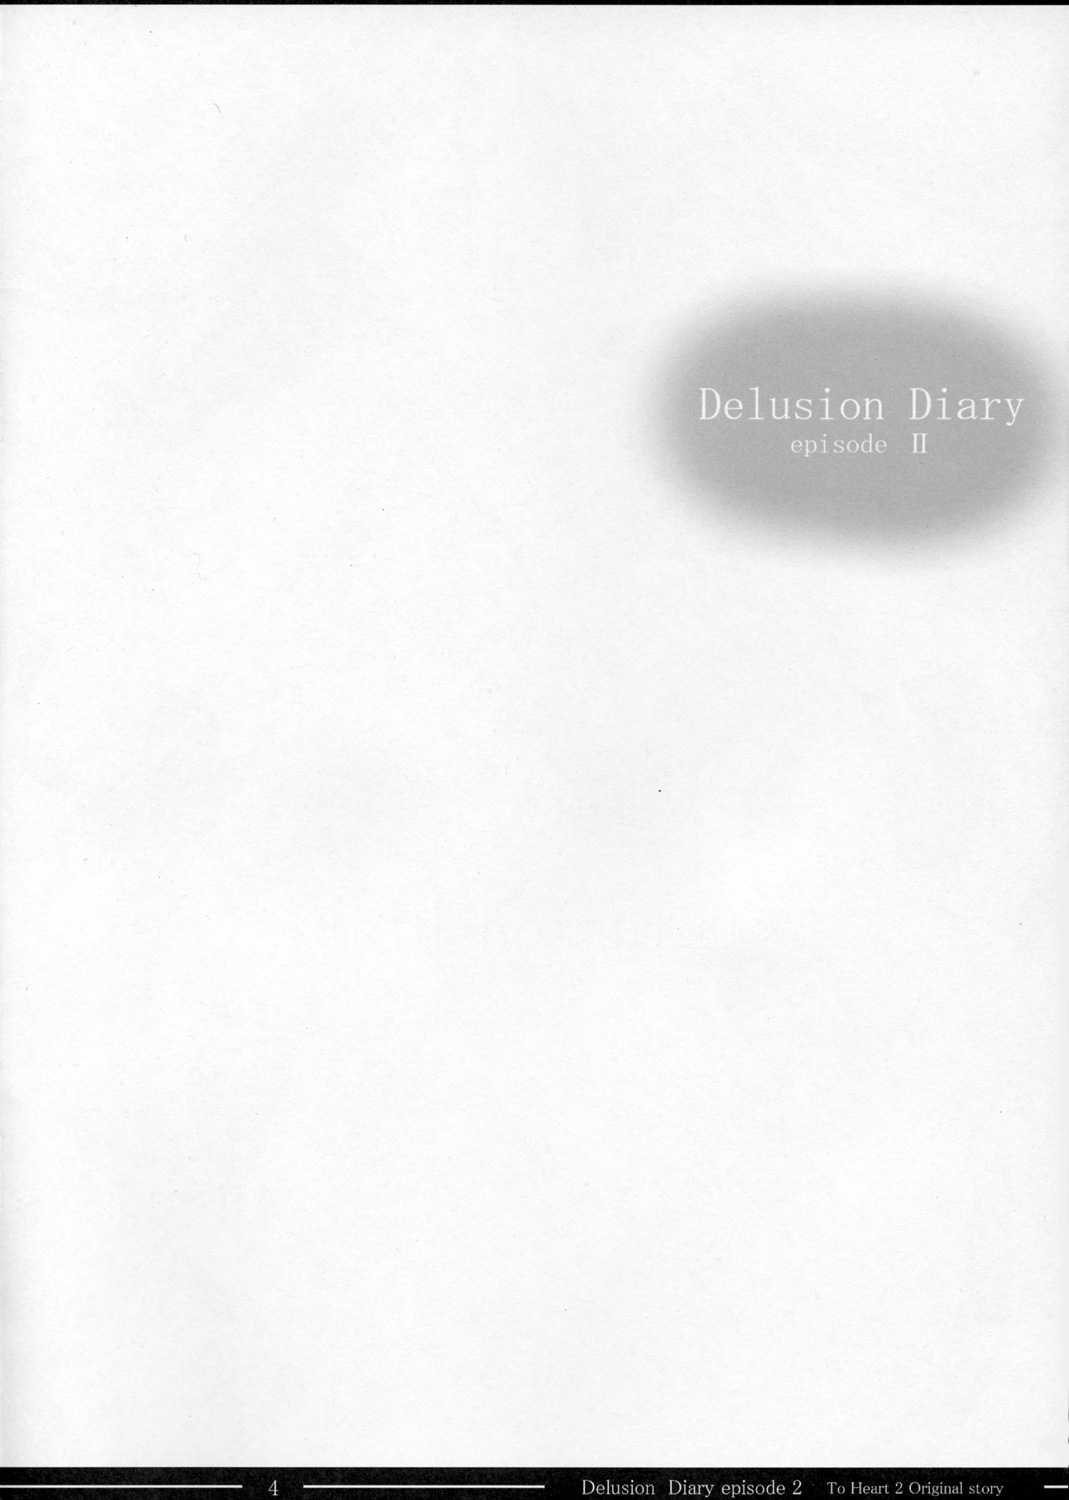 [Mugen No Tikara] Delusion Diary Episode2 (To Heart 2) 